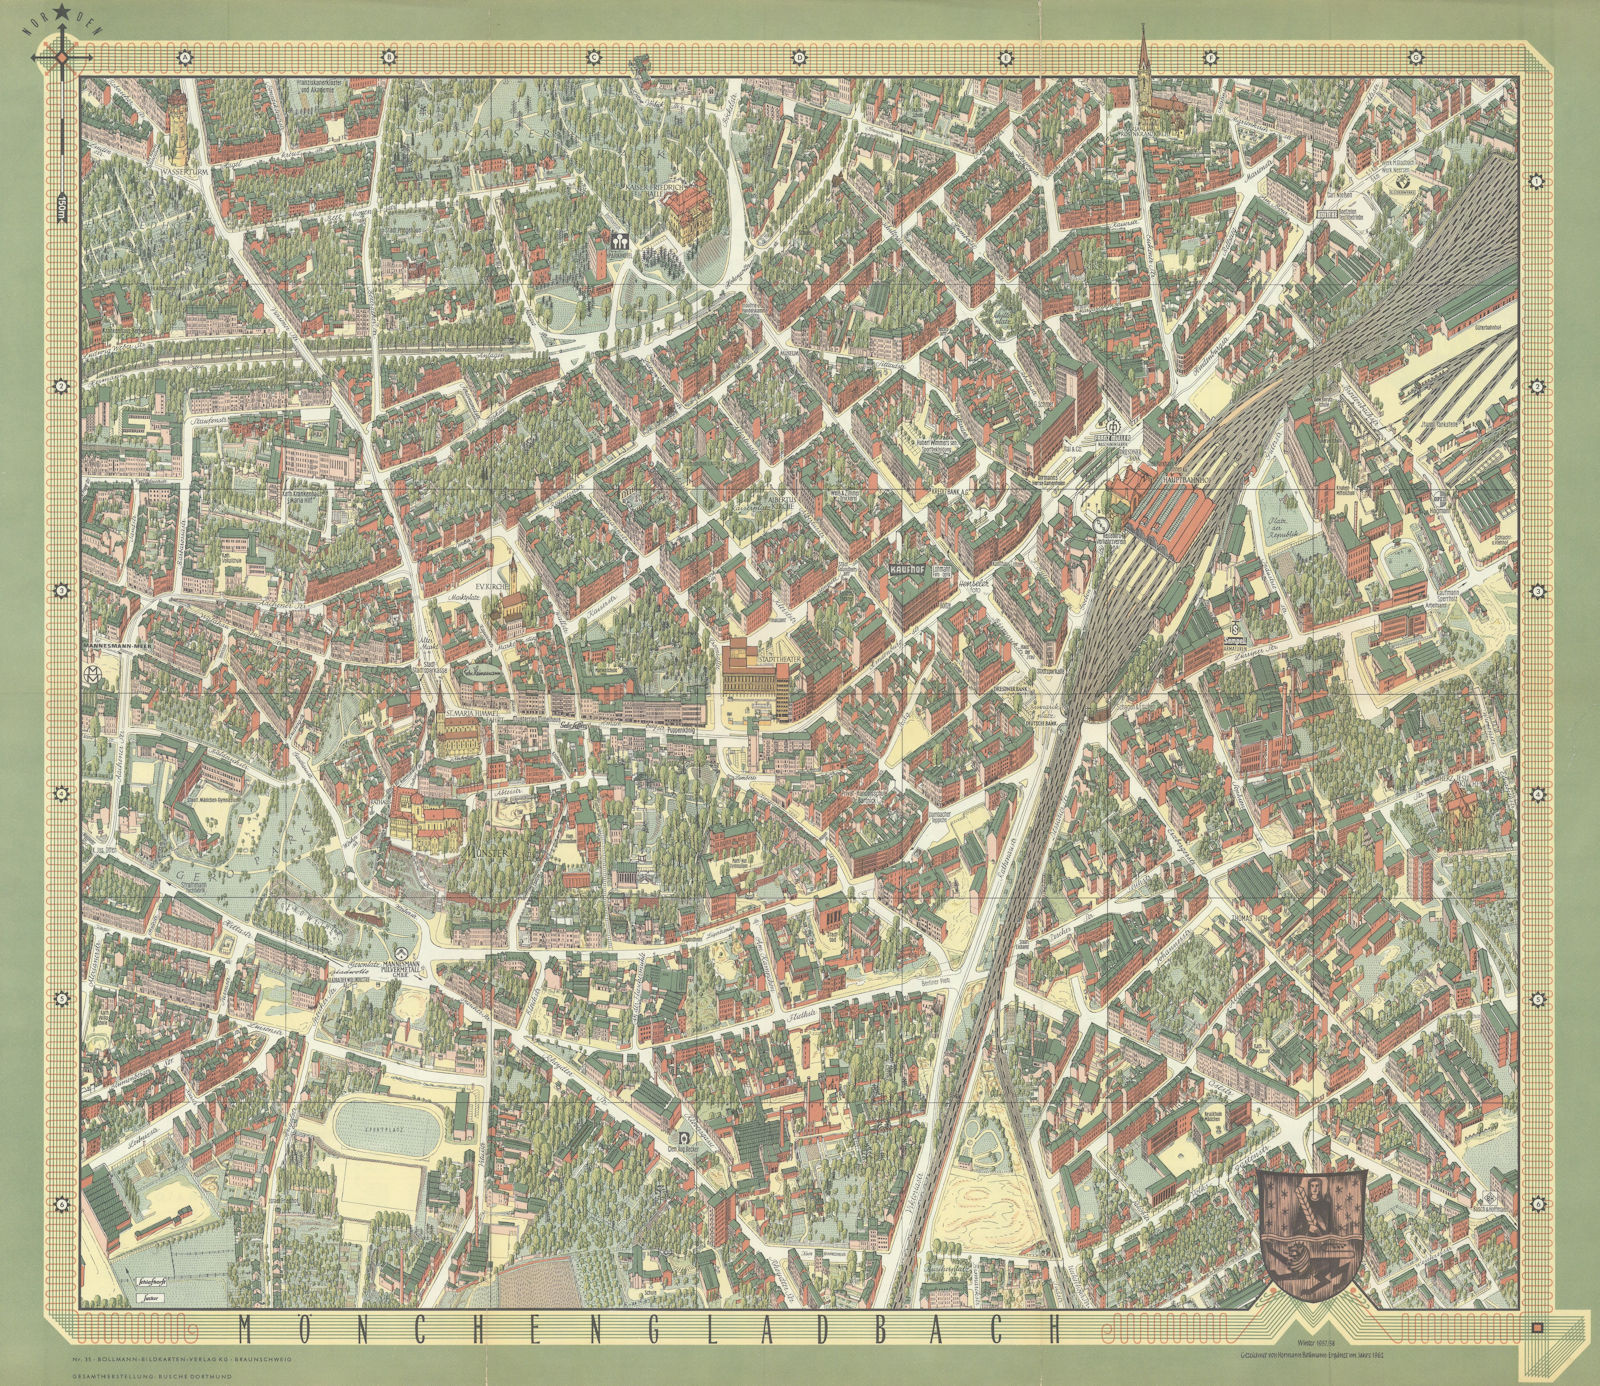 Associate Product Mönchengladbach pictorial bird's eye view city plan #35 BOLLMANN 1962 old map